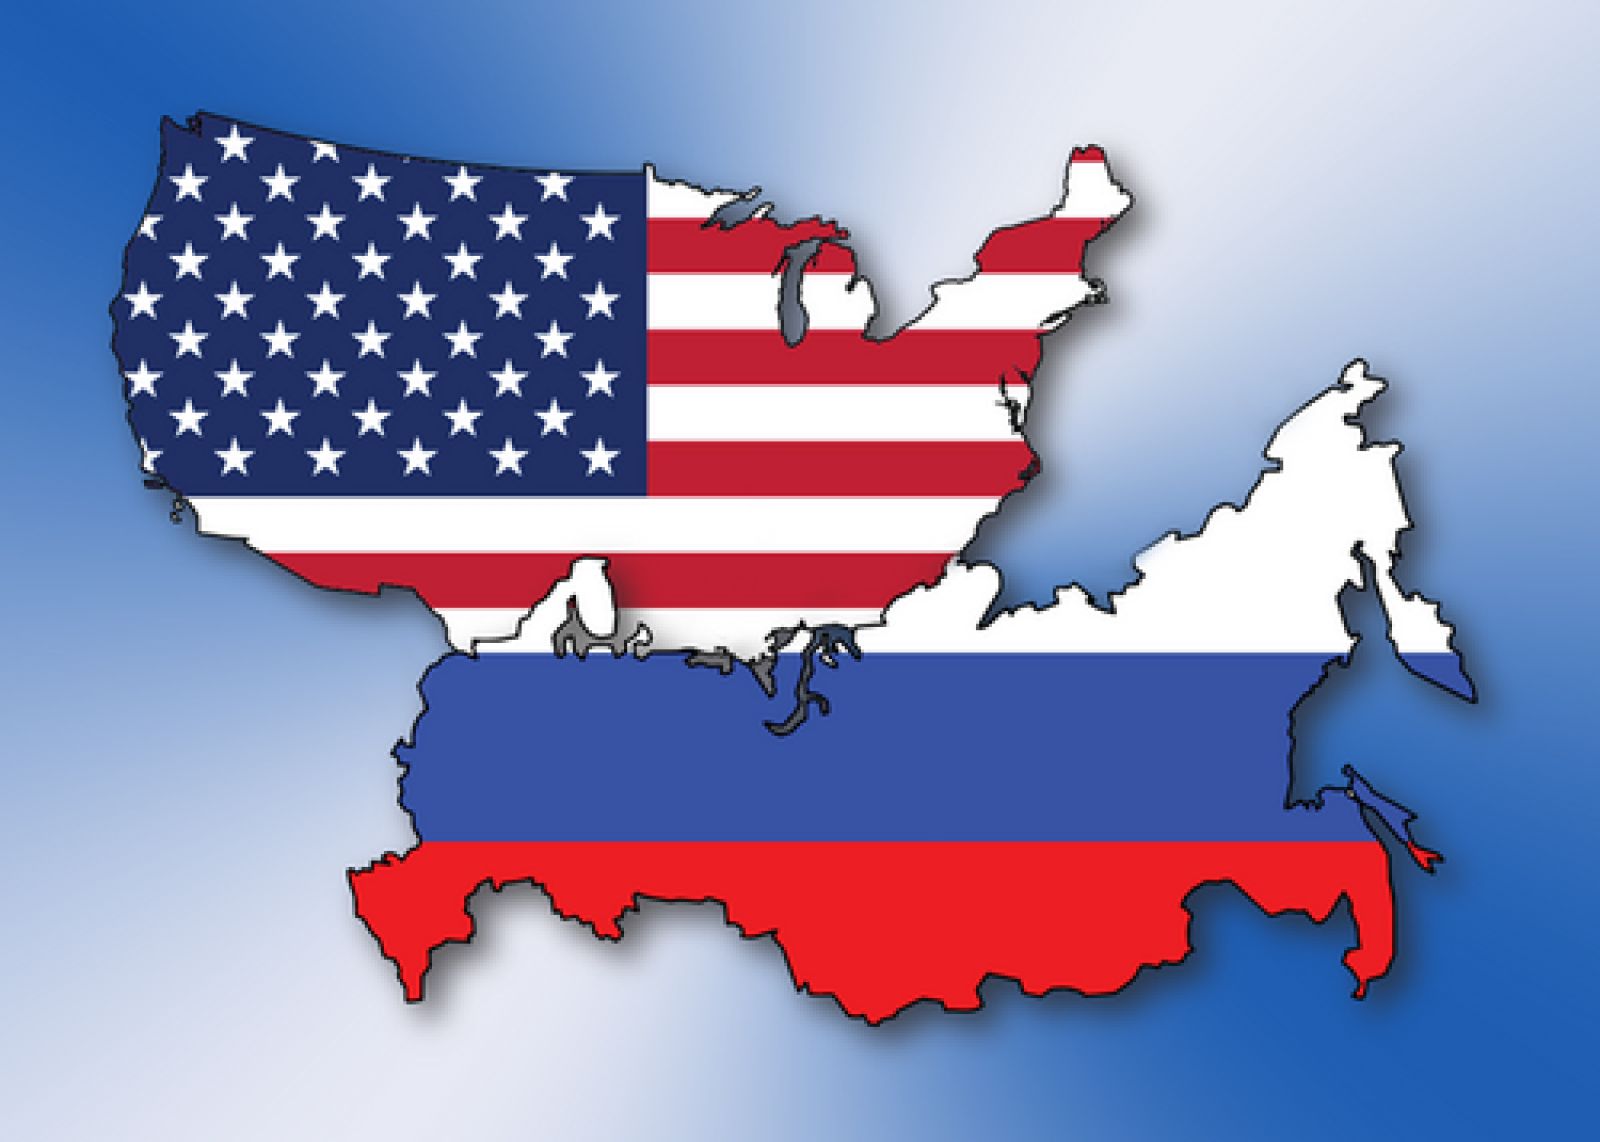 American in russia. Россия и США. Флаг России и США. Флаг США И России вместе. Российский и американский флаги.